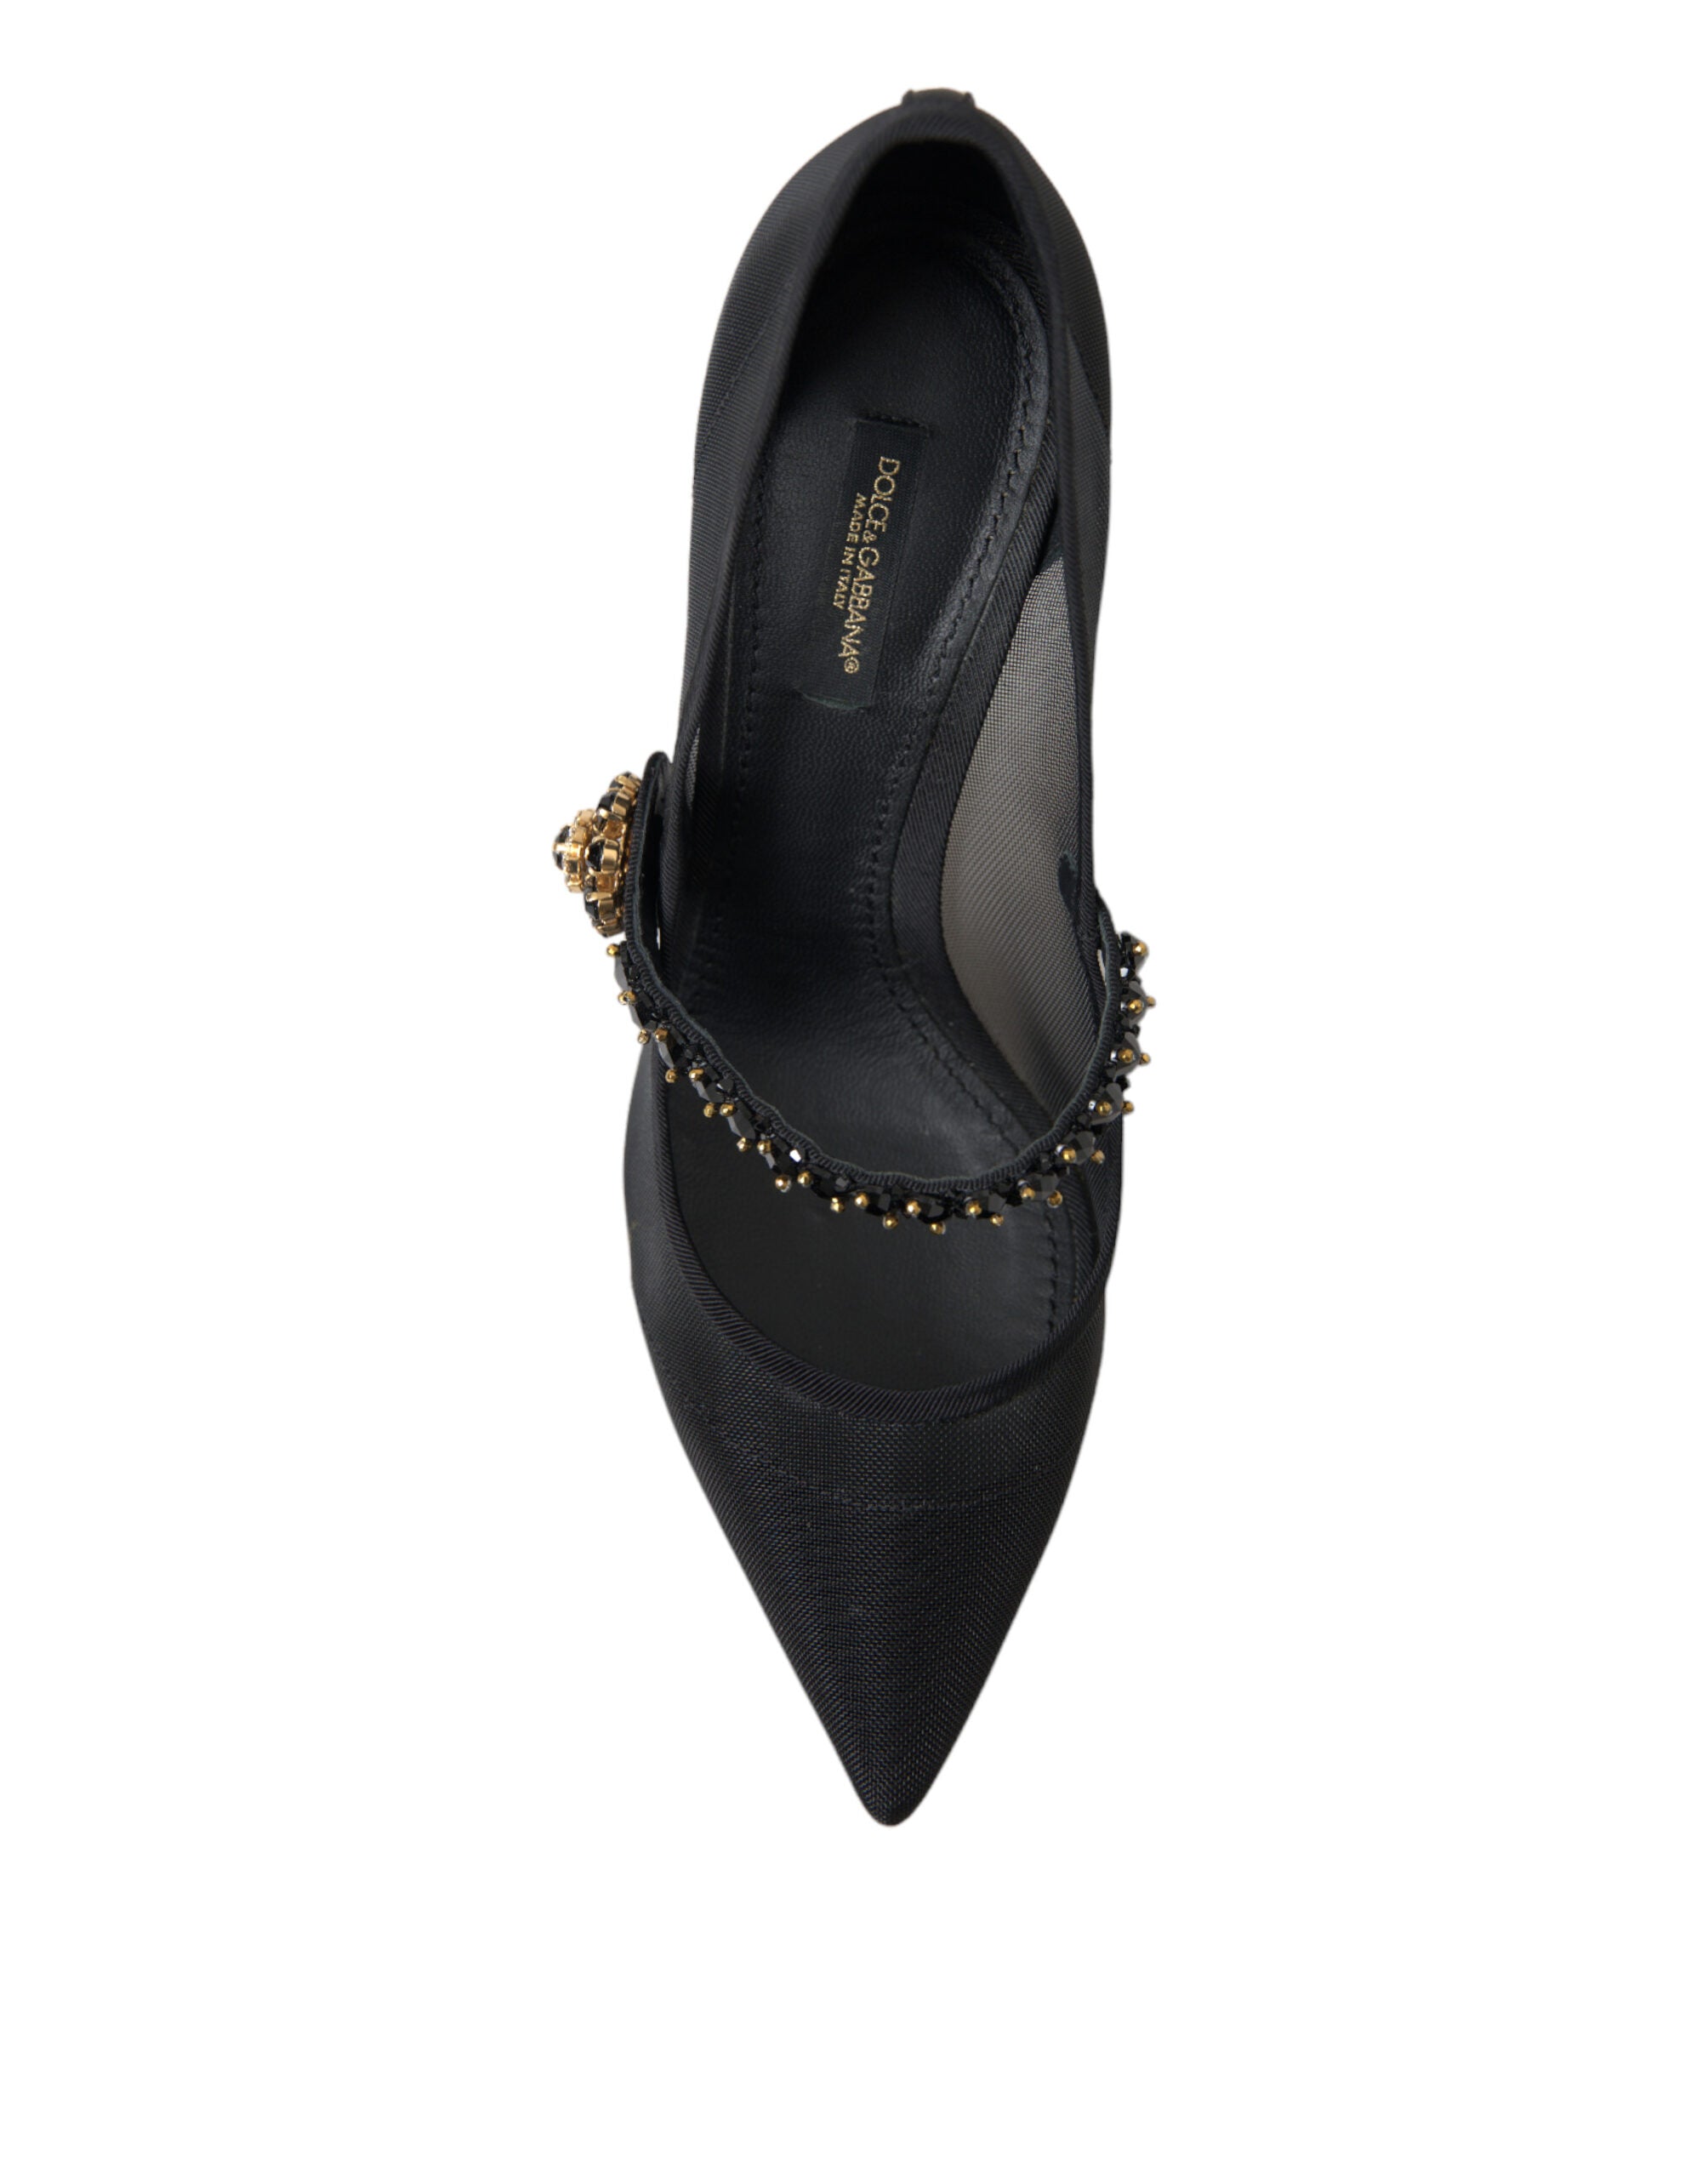 Dolce & Gabbana Crystal-Embellished Black Mary Jane Stilettos